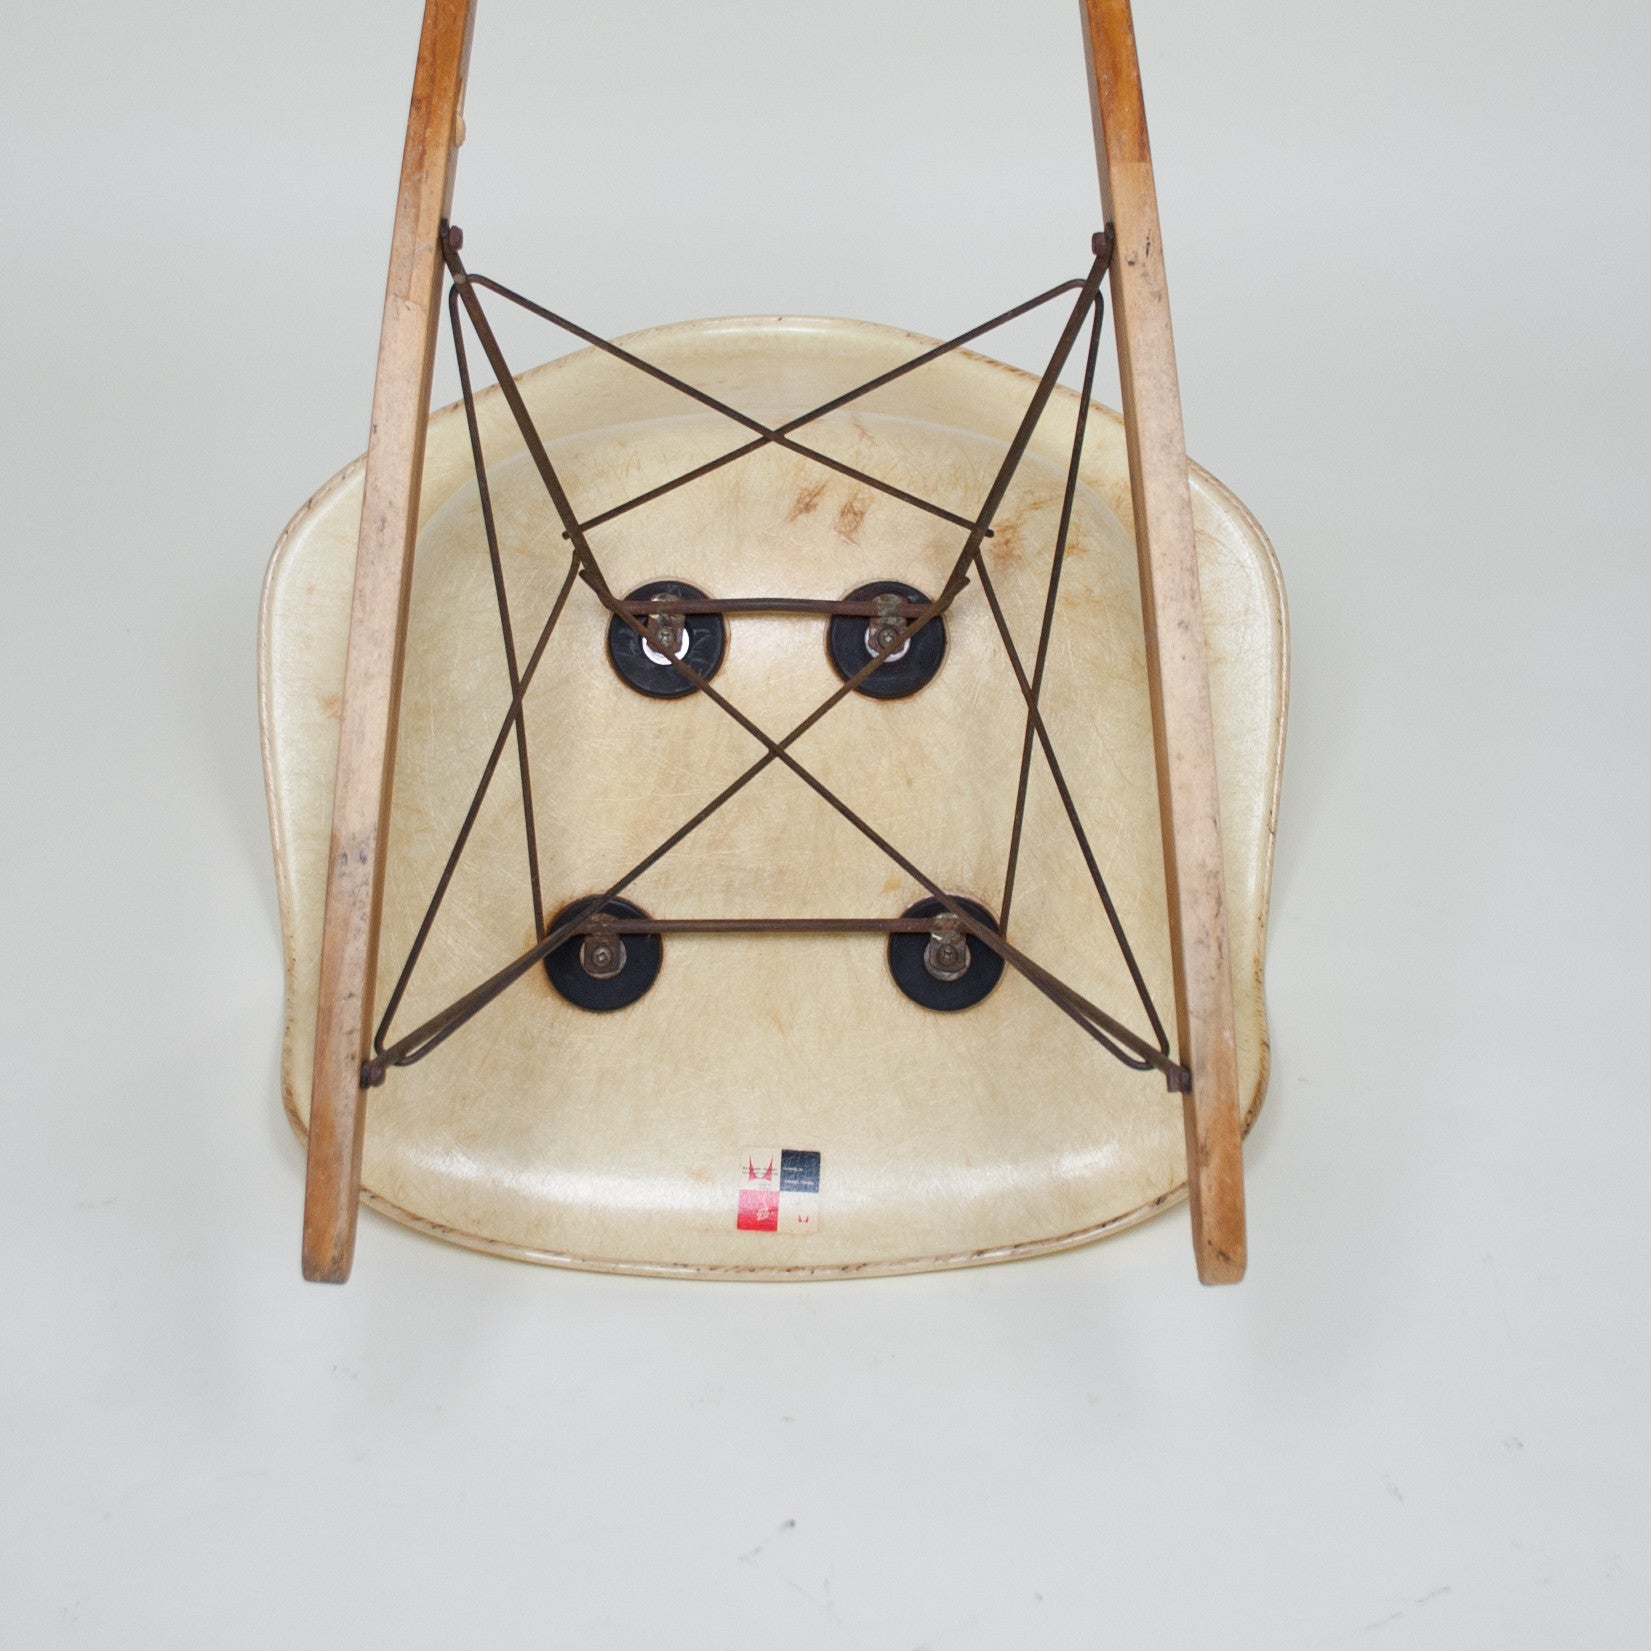 SOLD Eames Herman Miller Zenith Rope Edge Ankle Breaker Original Rocker Rocking Chair Marked